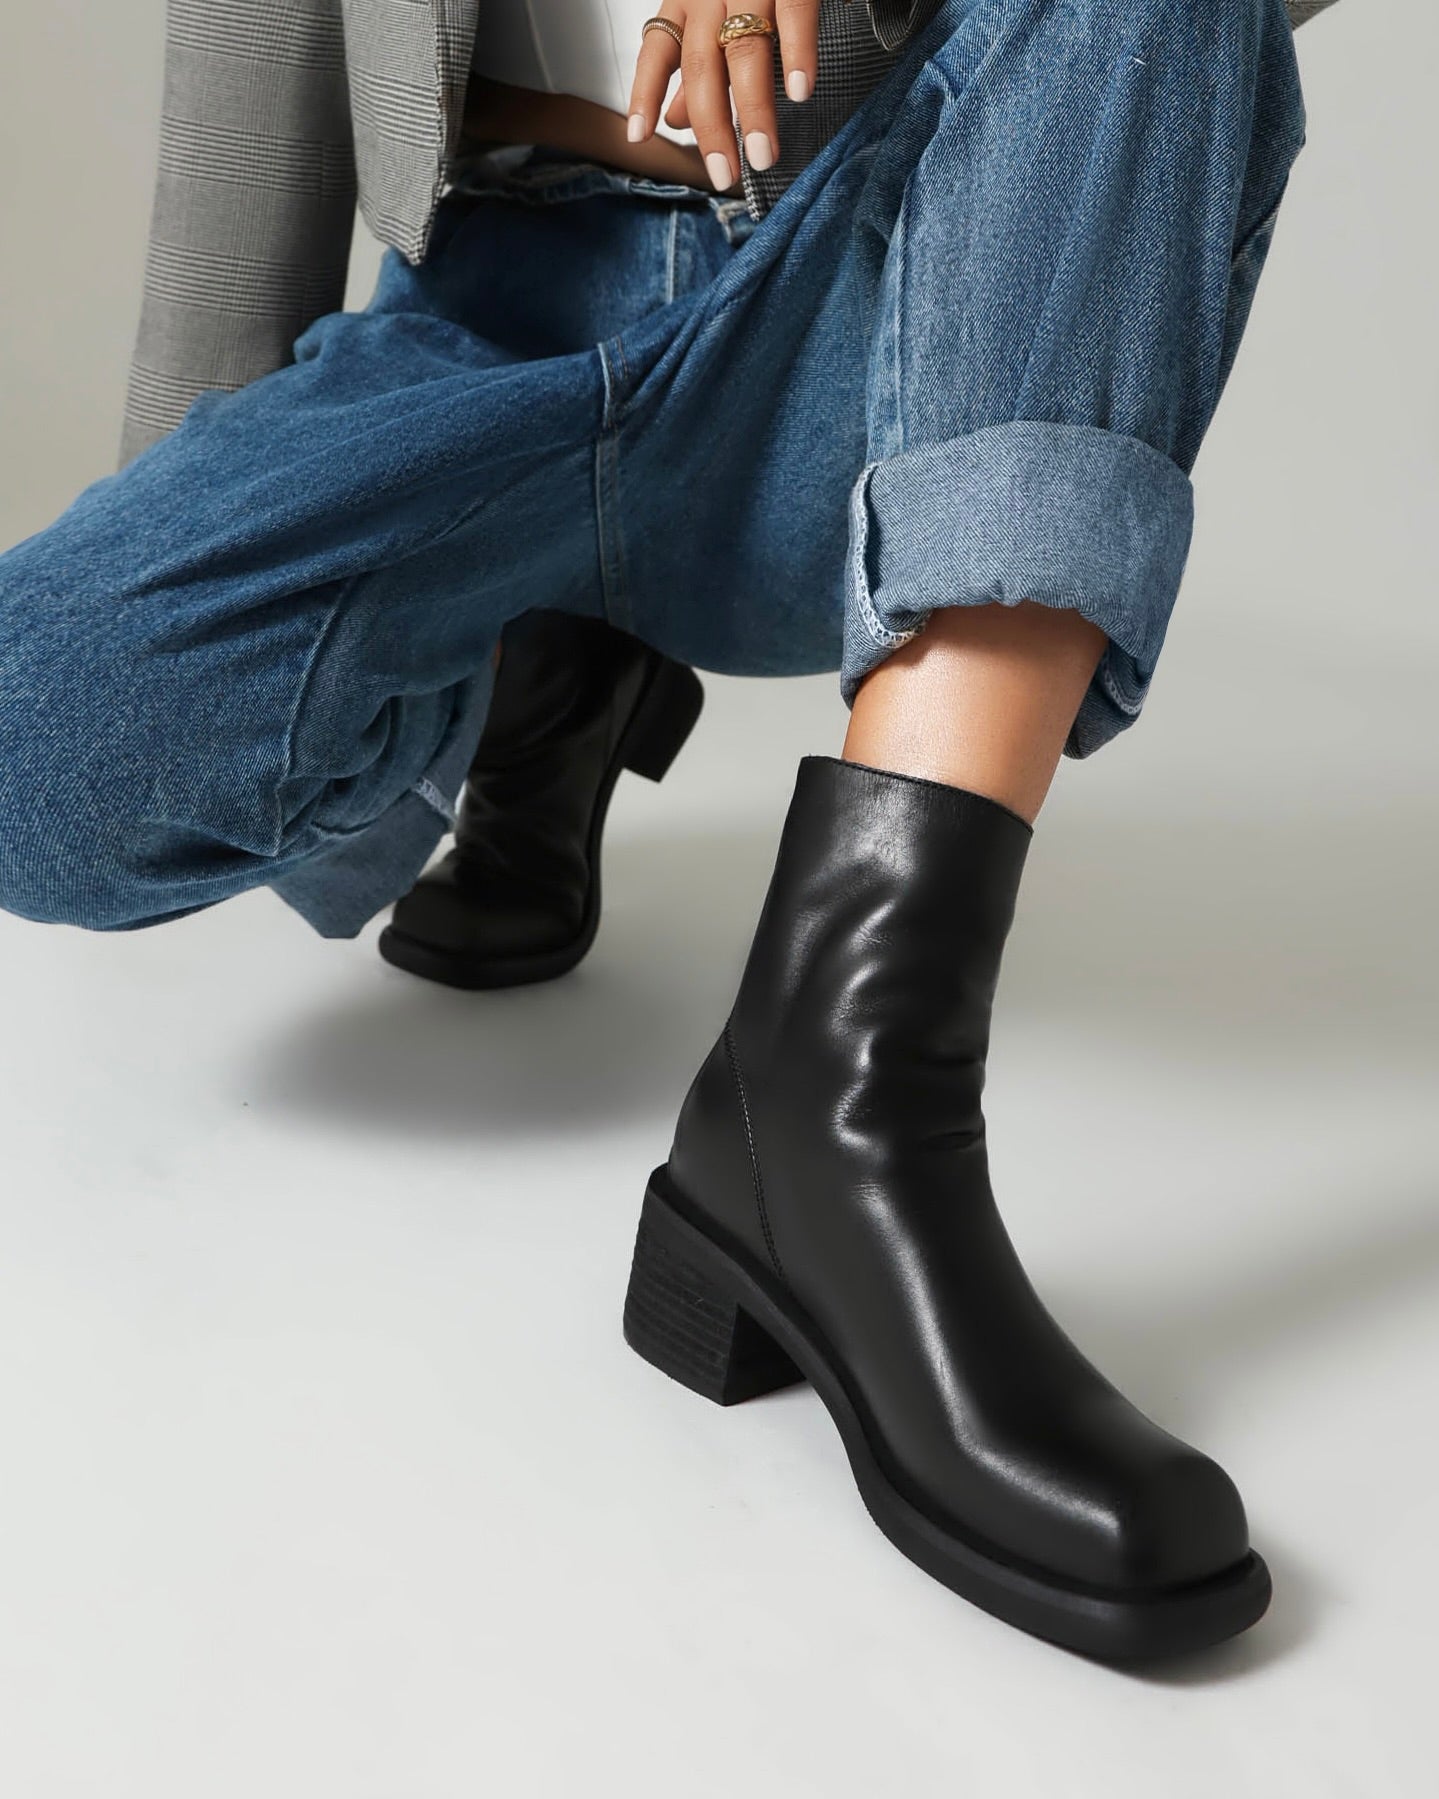    Vefa-Square-Toe-Black-Leather-Boots-model-2